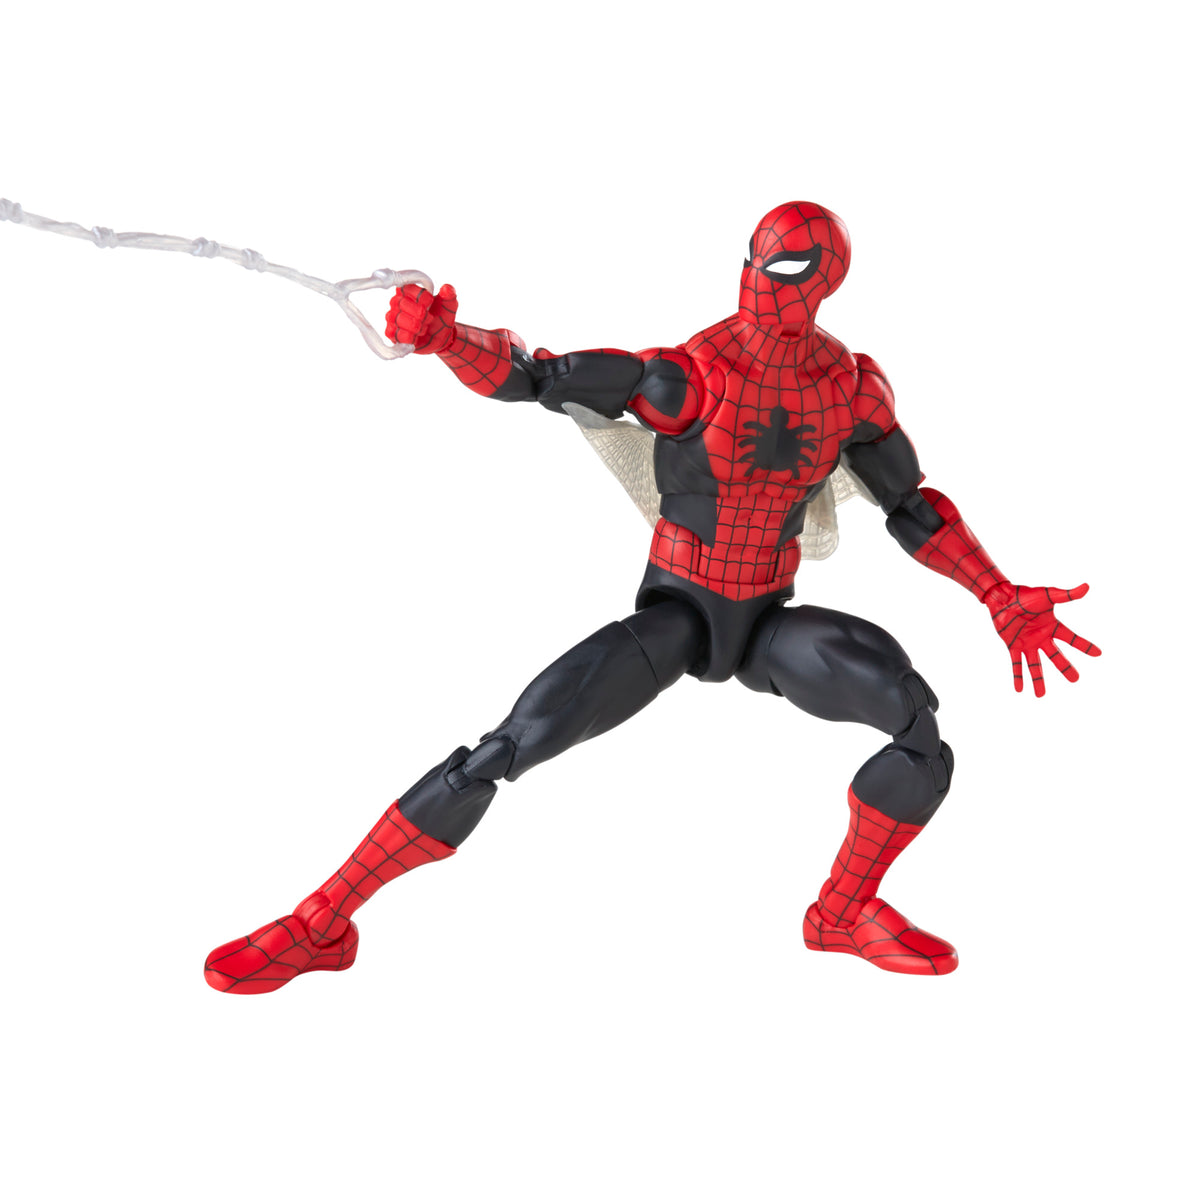 Amazing Fantasy Marvel Legends Retro Collection 3.75 Spider-Man